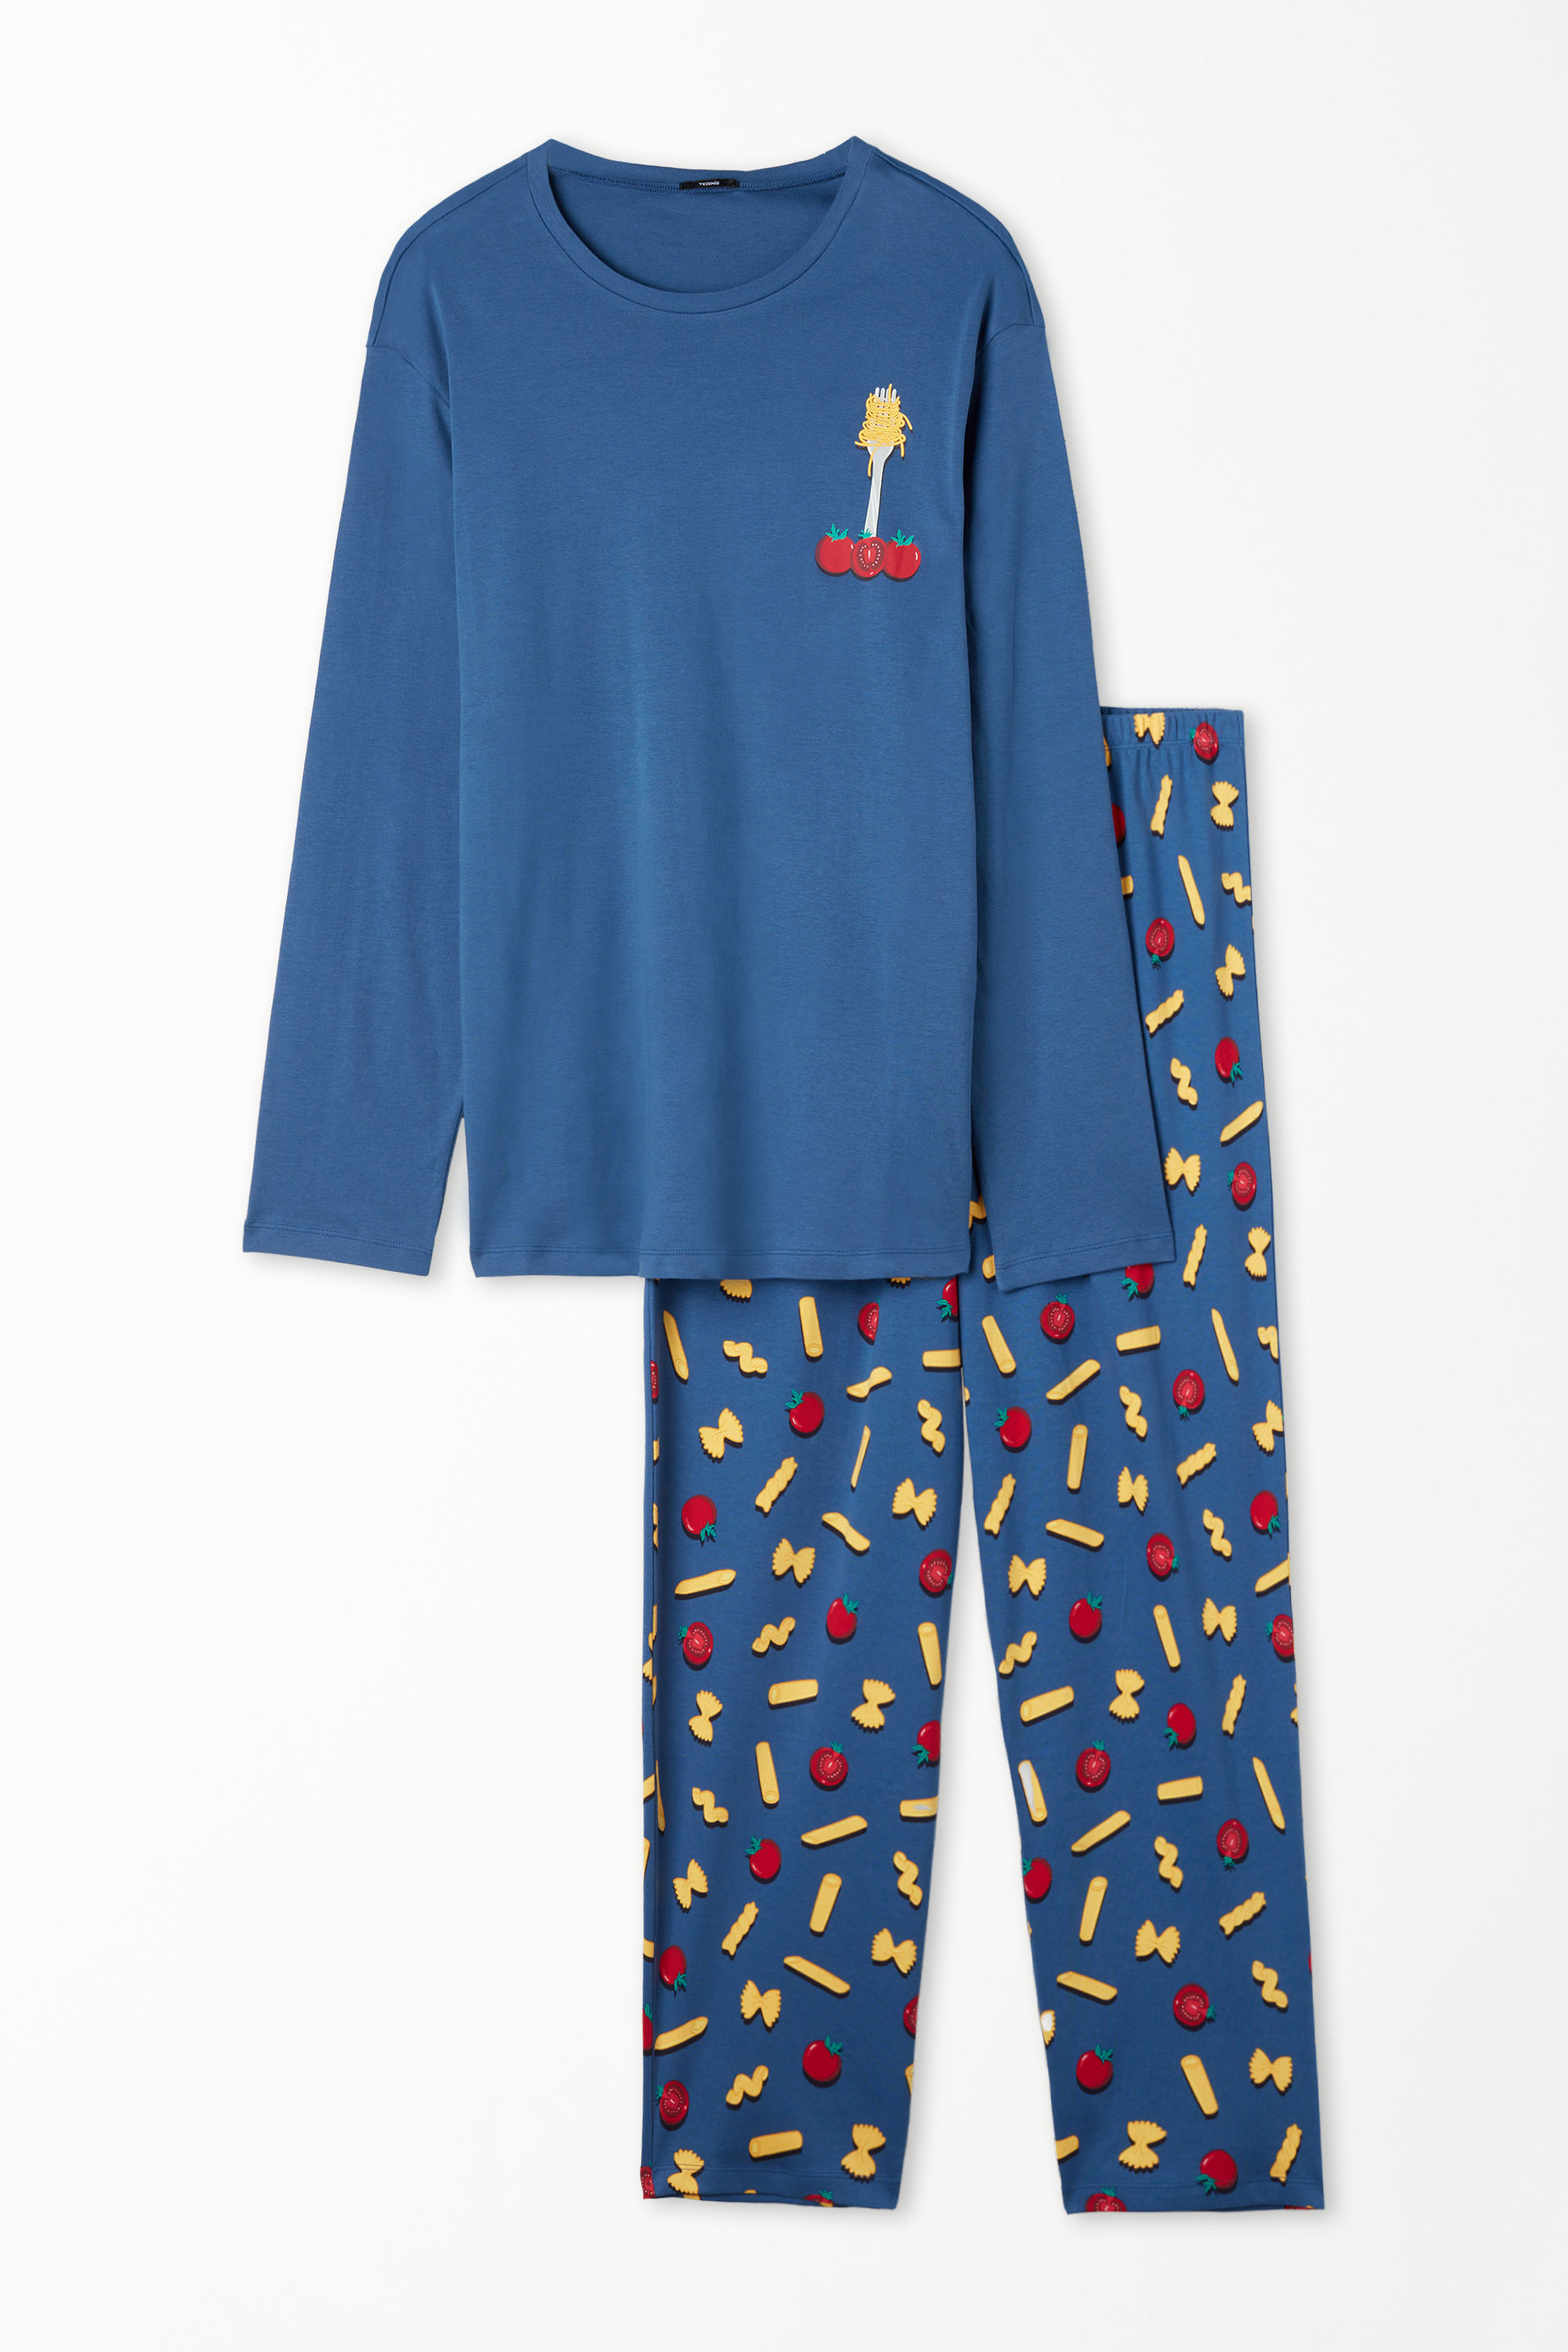 Pyjama Long Coton Imprimé Pâtes